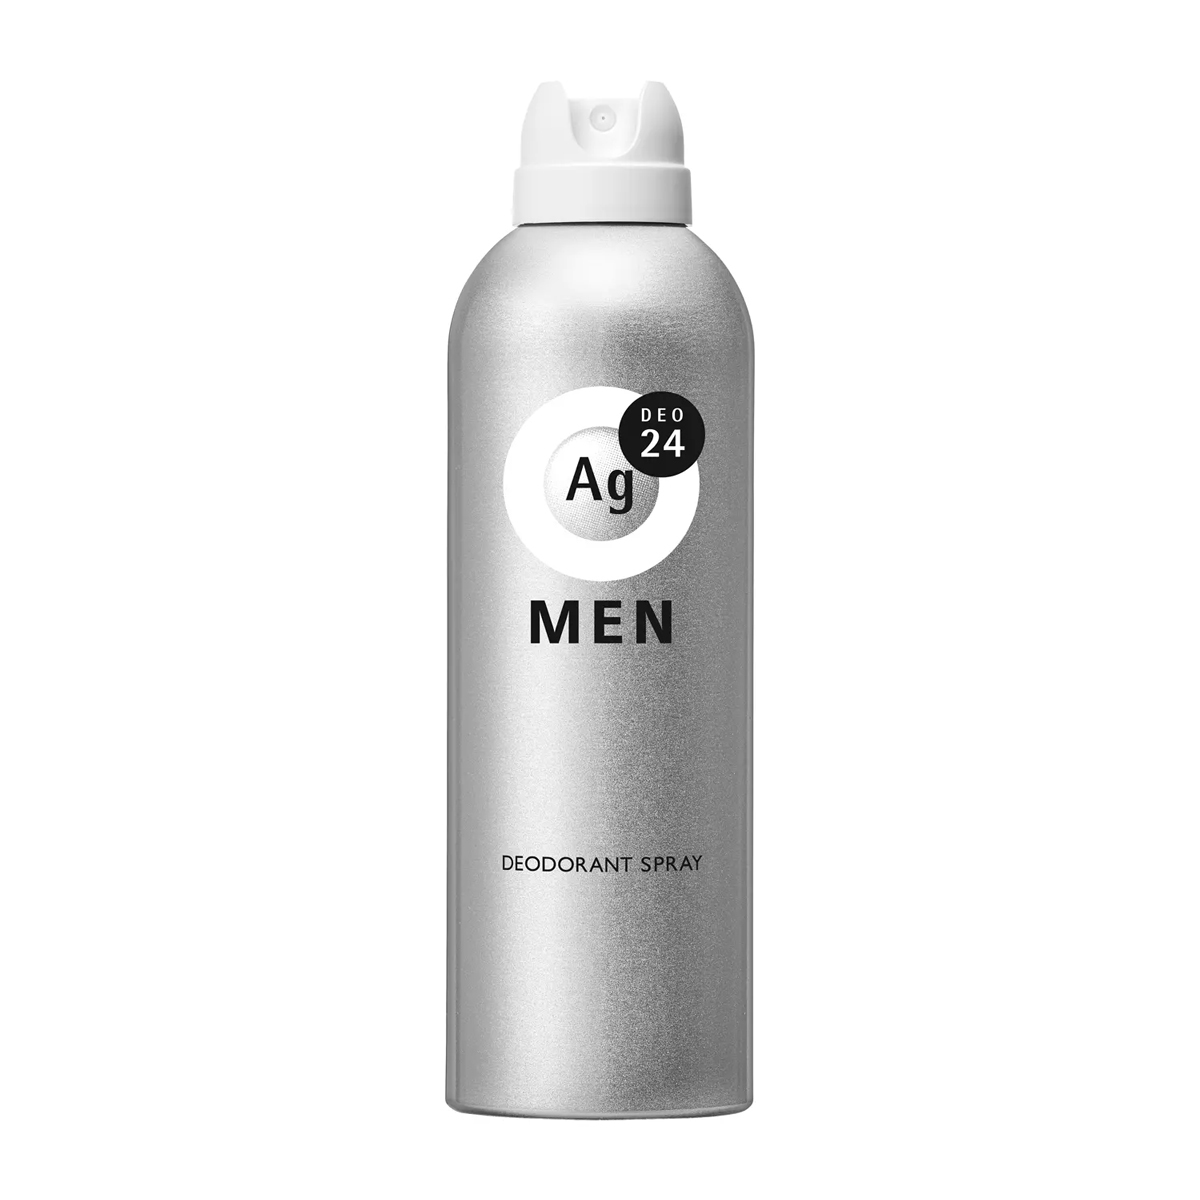  summarize profit e-ji-teo24 men men's deodorant spray N less ..LL 180g x [3 piece ] /k